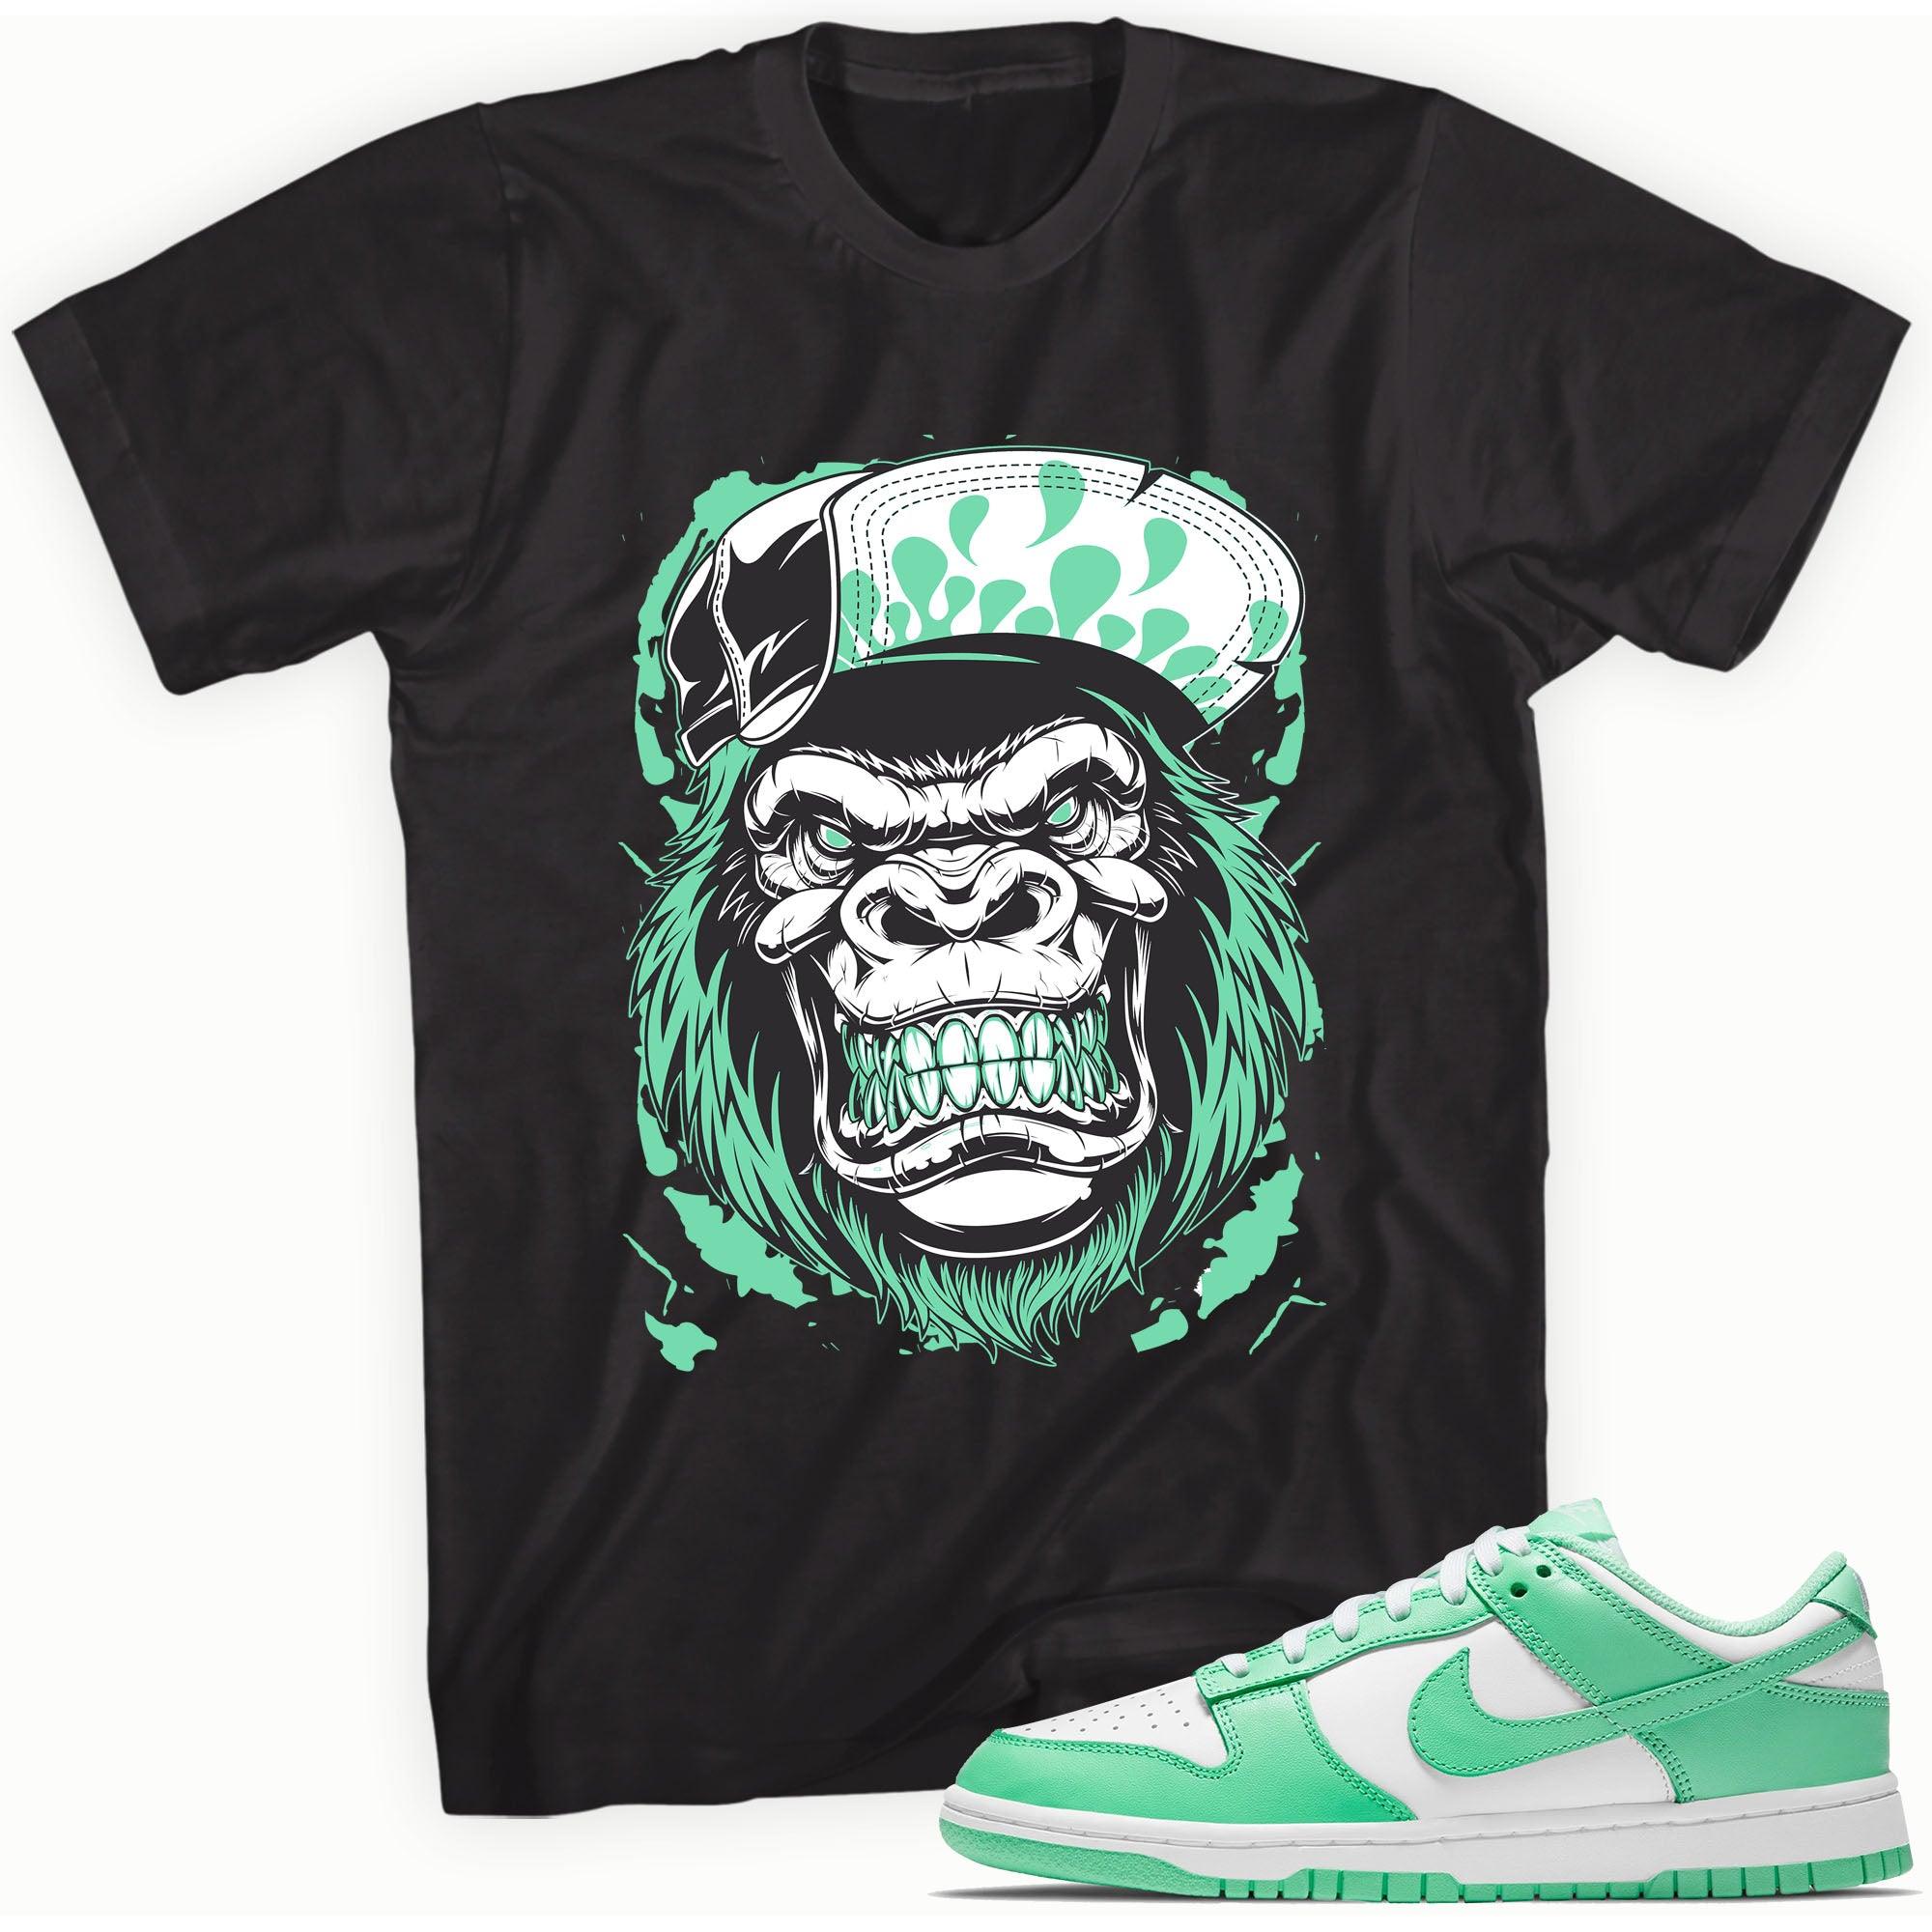 Black Gorilla Beast Shirt Nike Dunks Low Green Glow photo